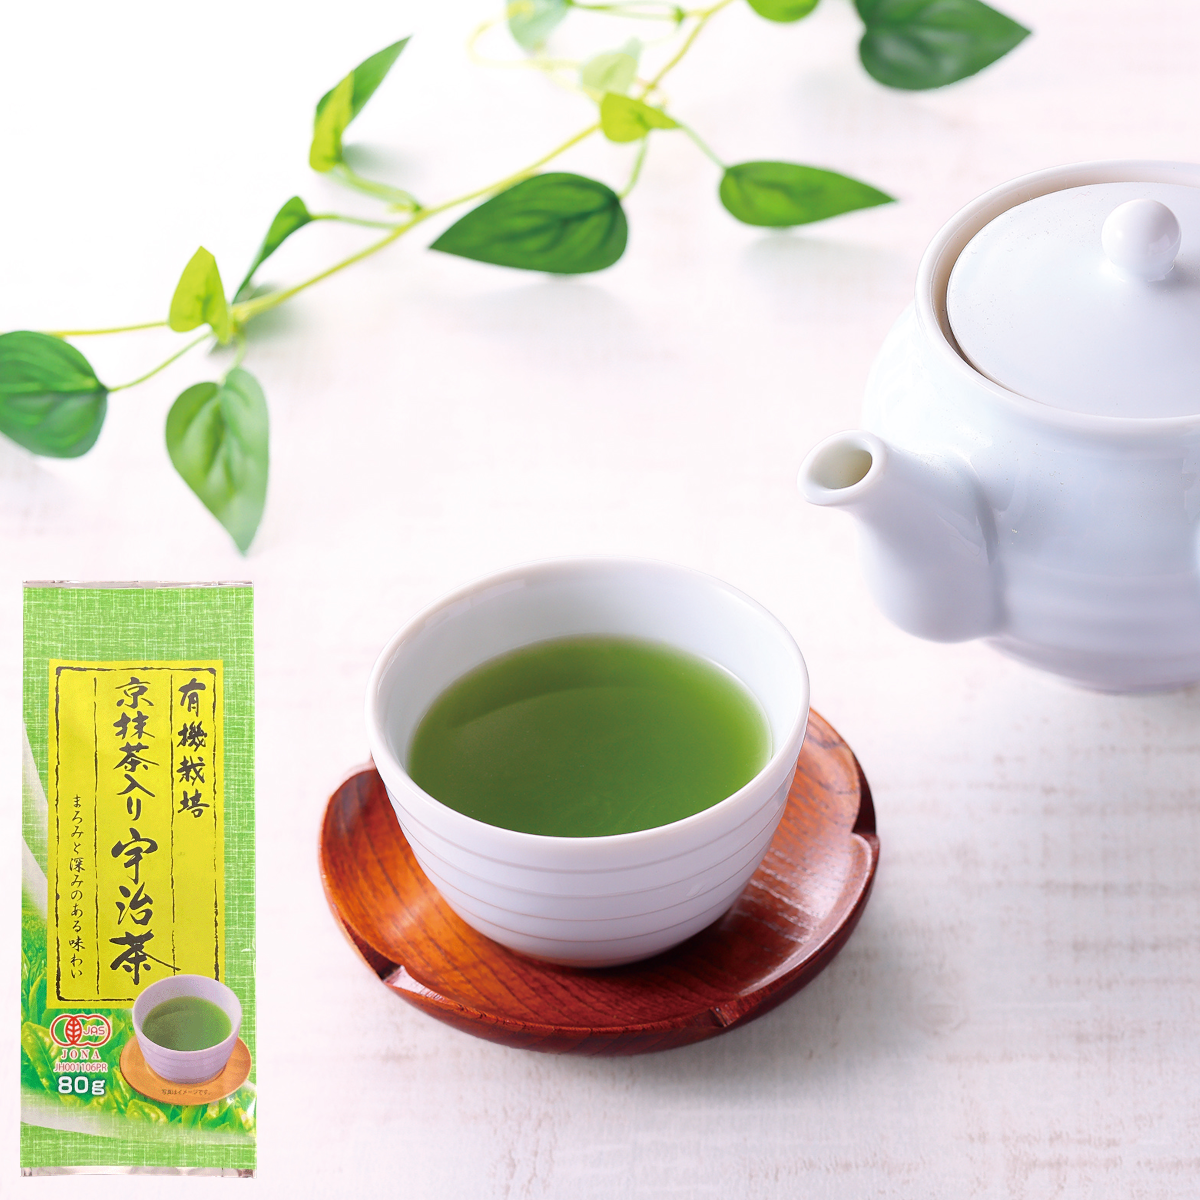 Thé vert japonais Sencha Matcha bio – 80g - feuilles de thé en vrac